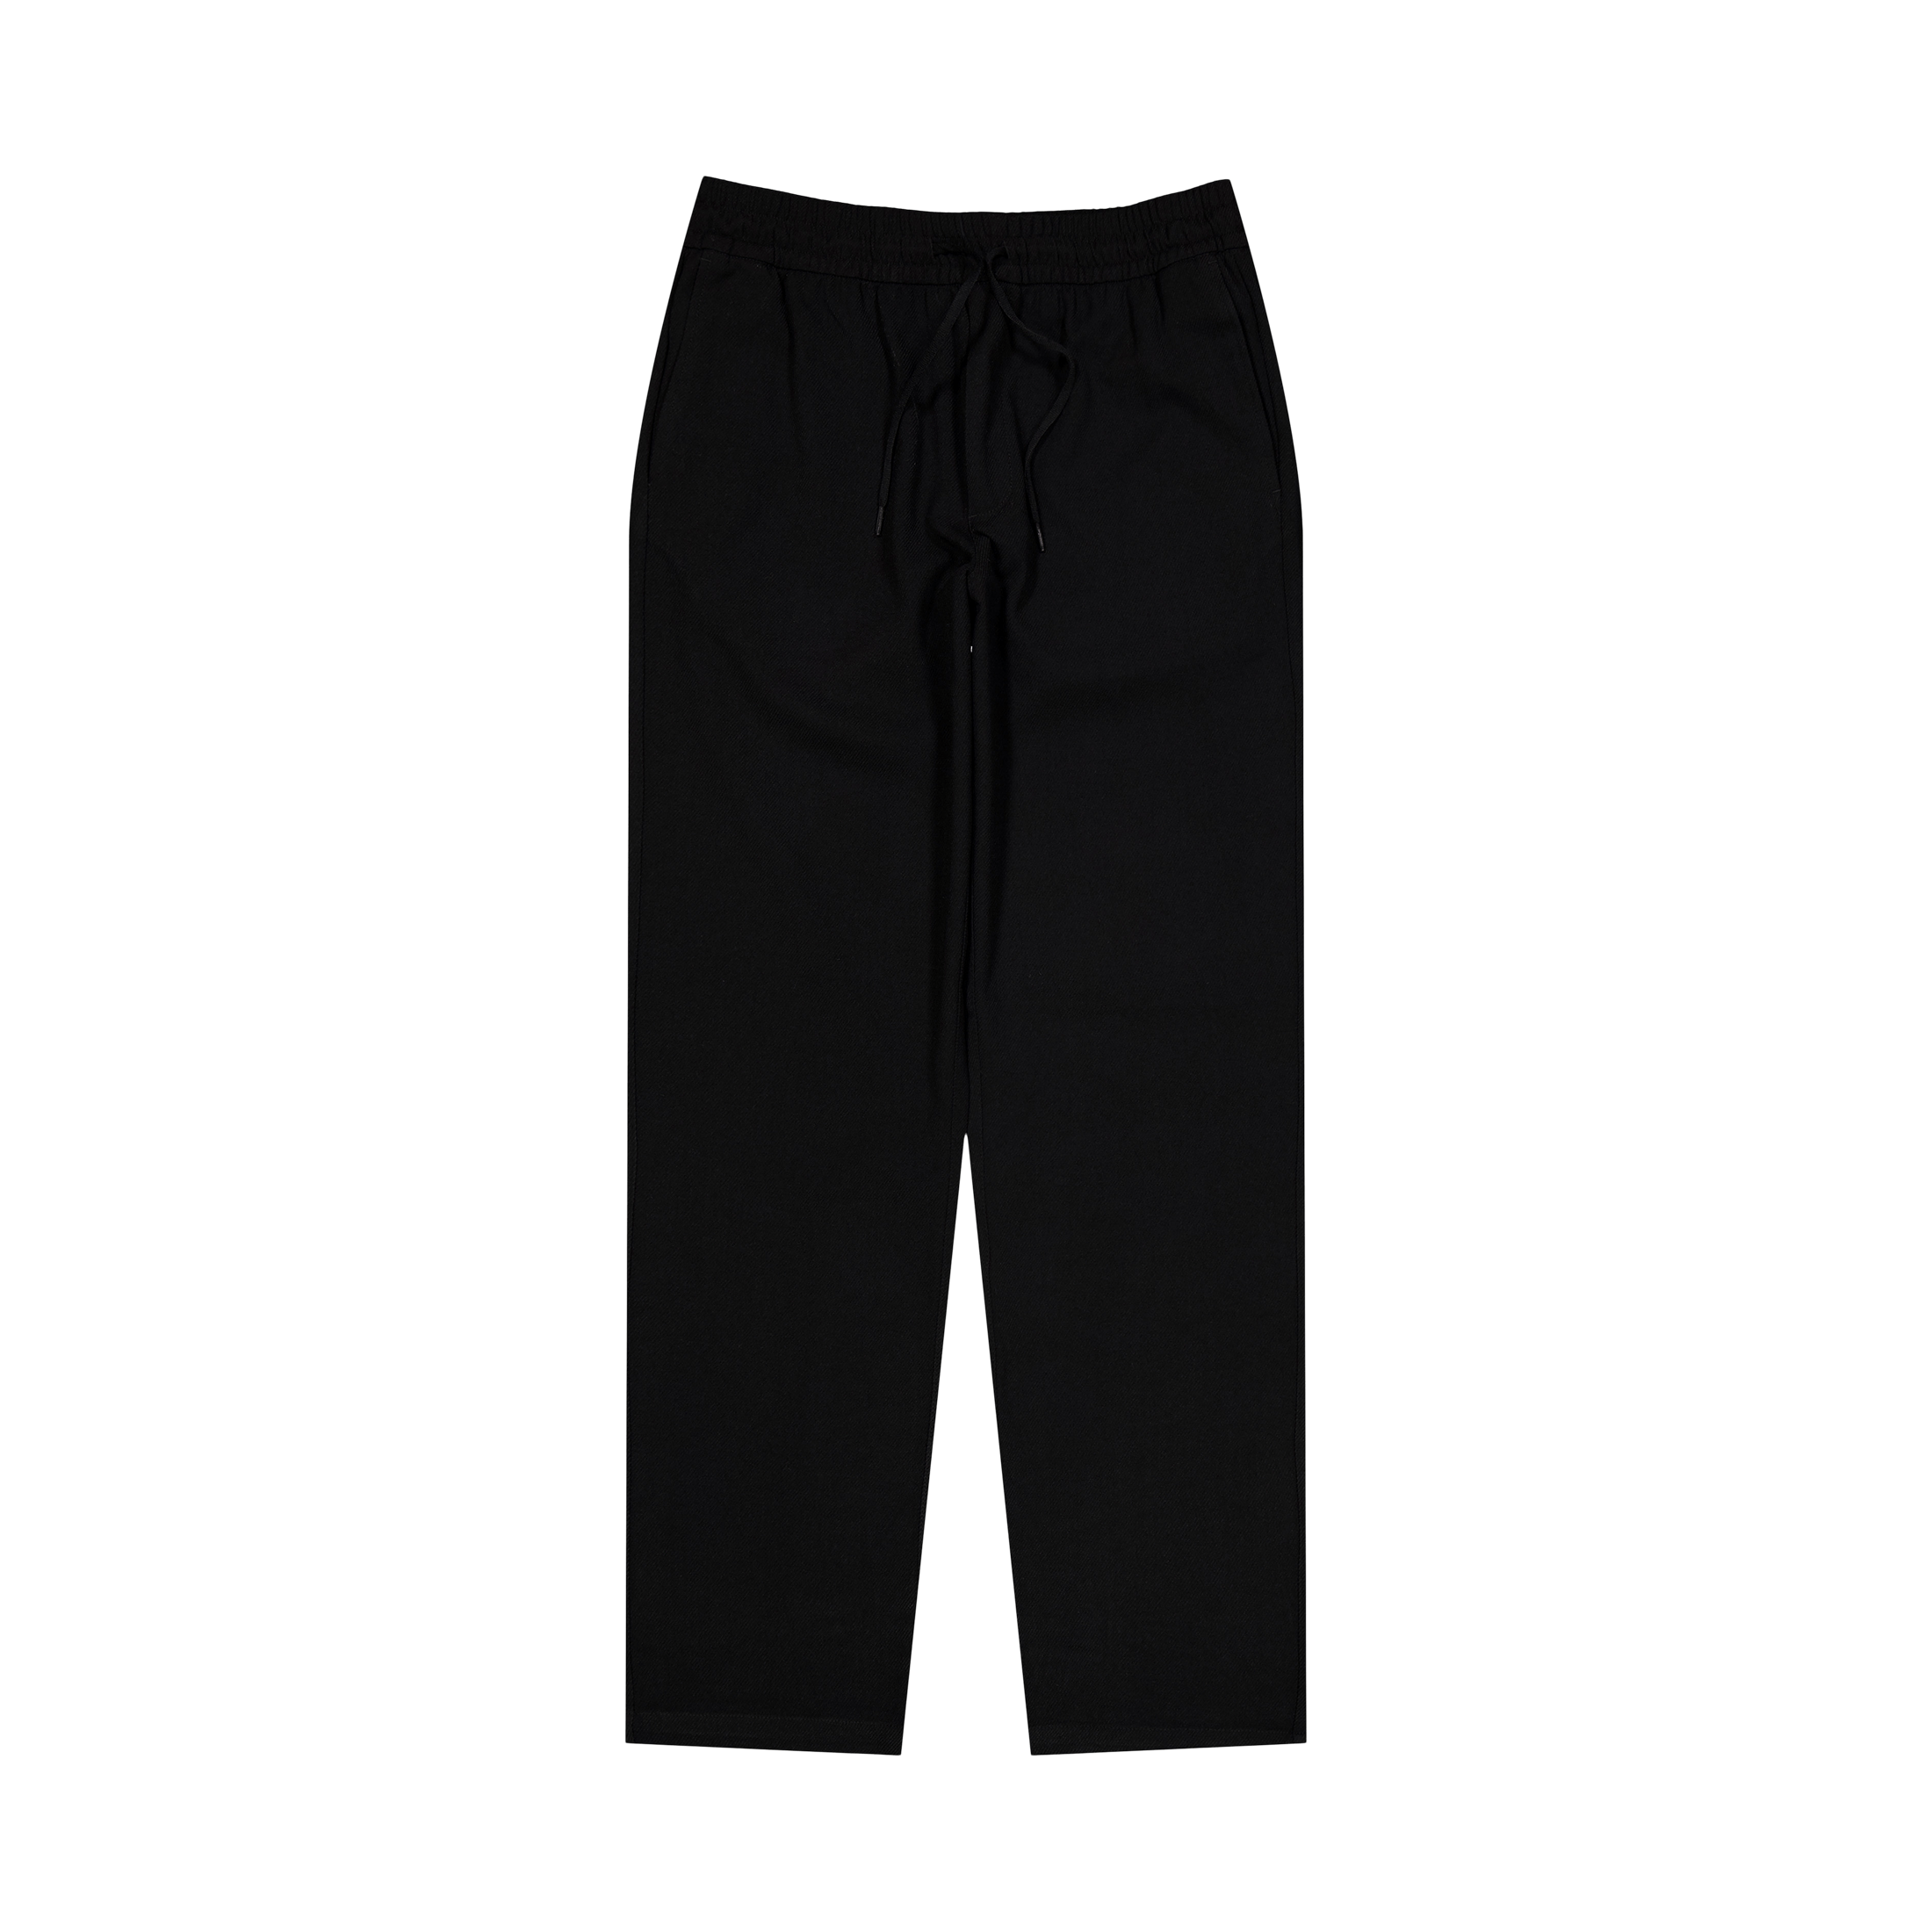 Les Deux PATRICK DRAWSTRING PANTS - Trousers - black 